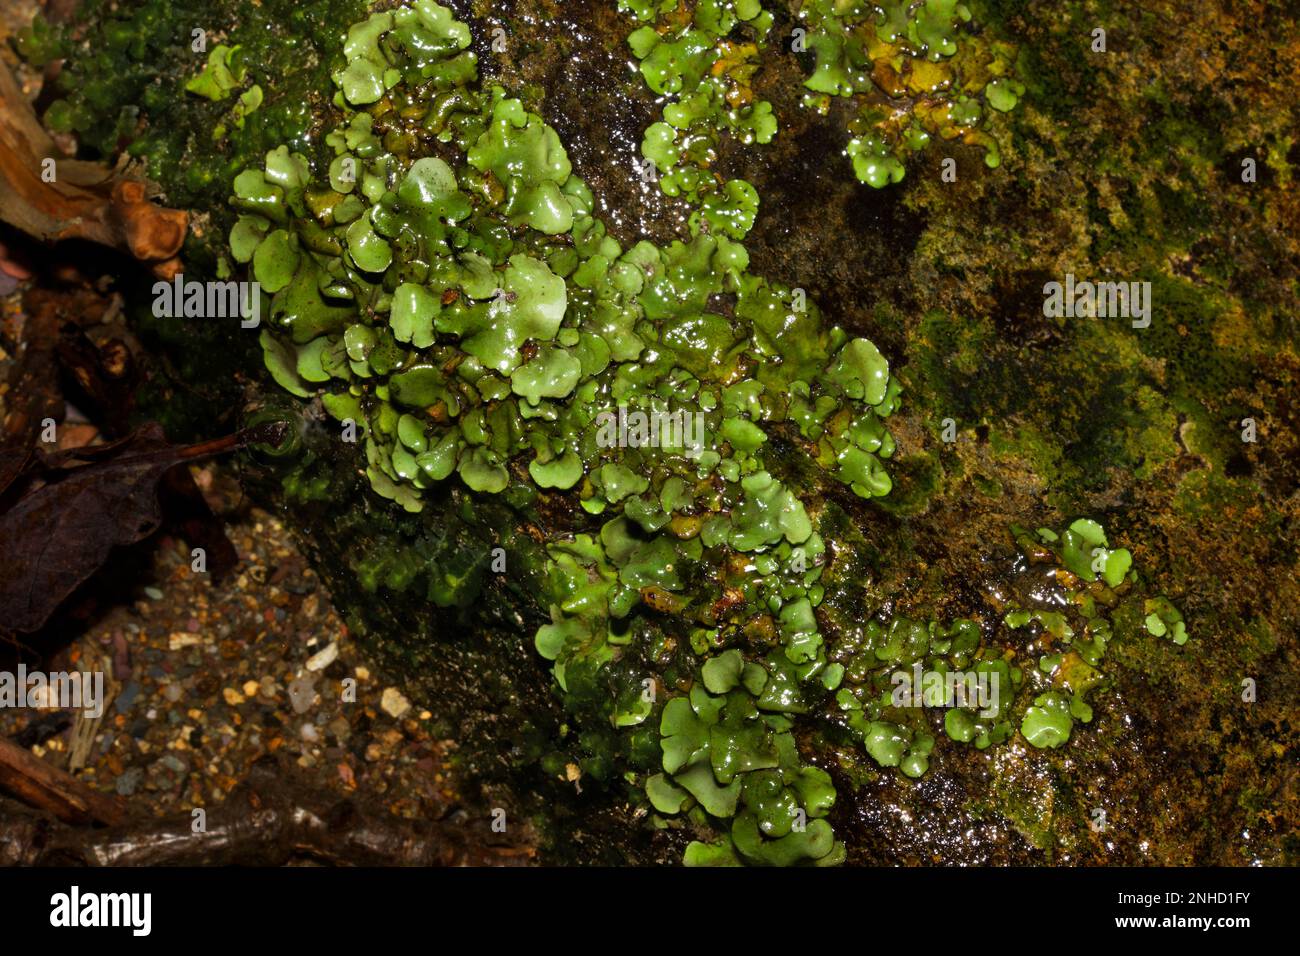 The lichen Dermatocarpon luridum grows on wet rocks often by rocky rivers where it maybe submerged. Stock Photo